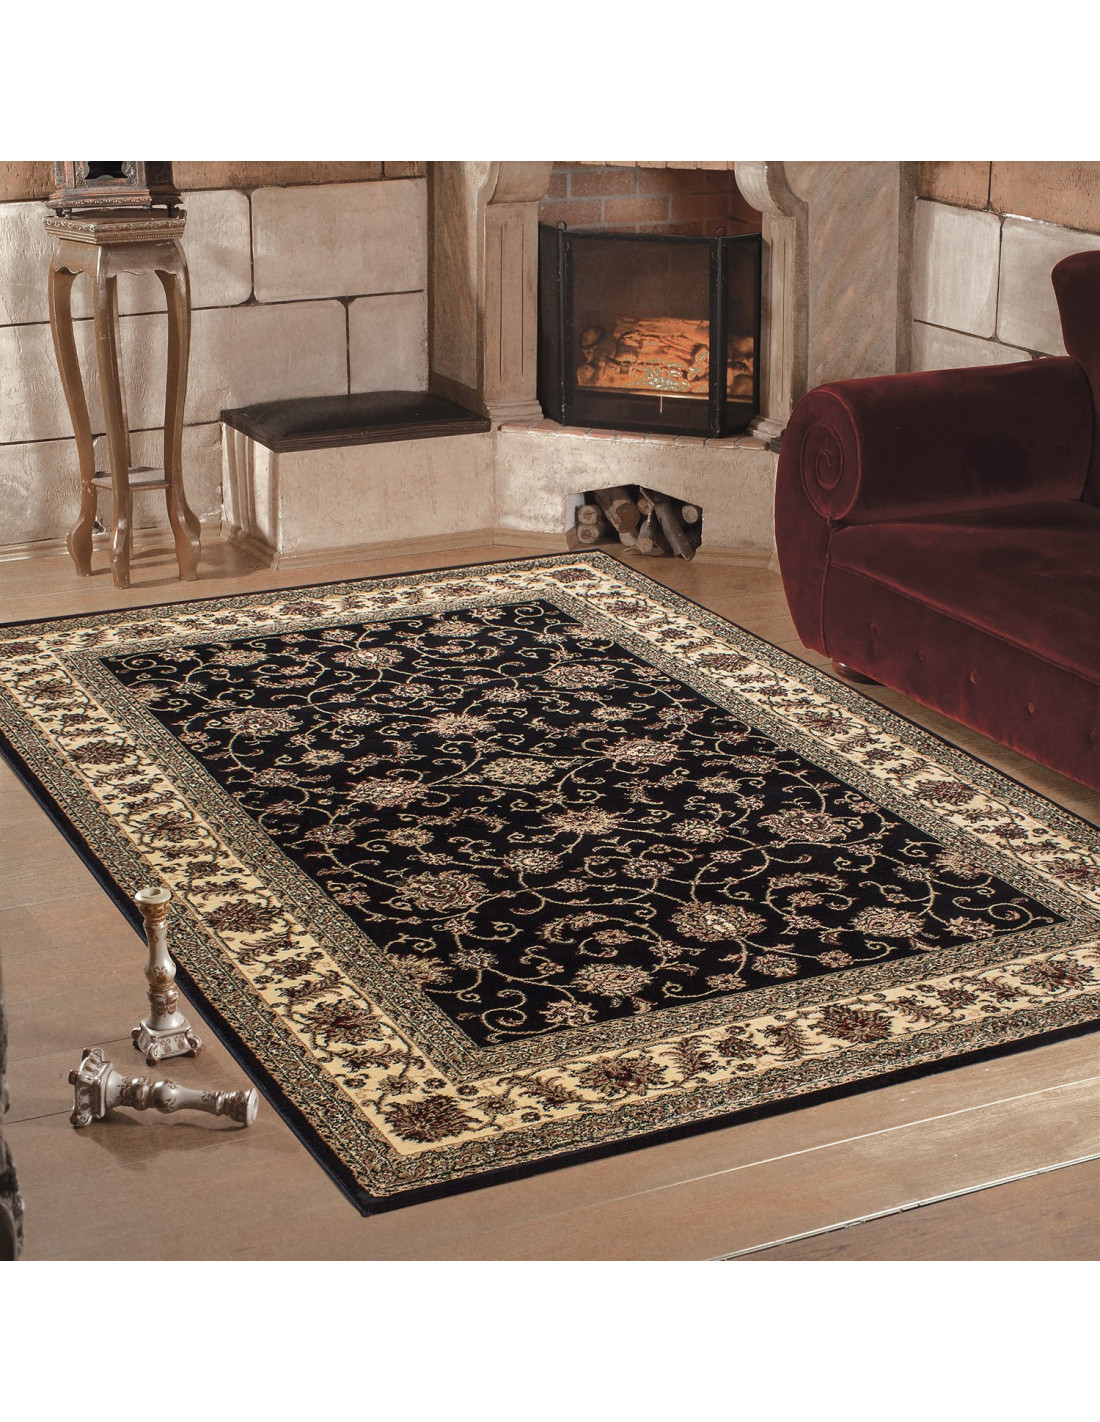 Classic oriental living room rug Marrakesh 0210 black